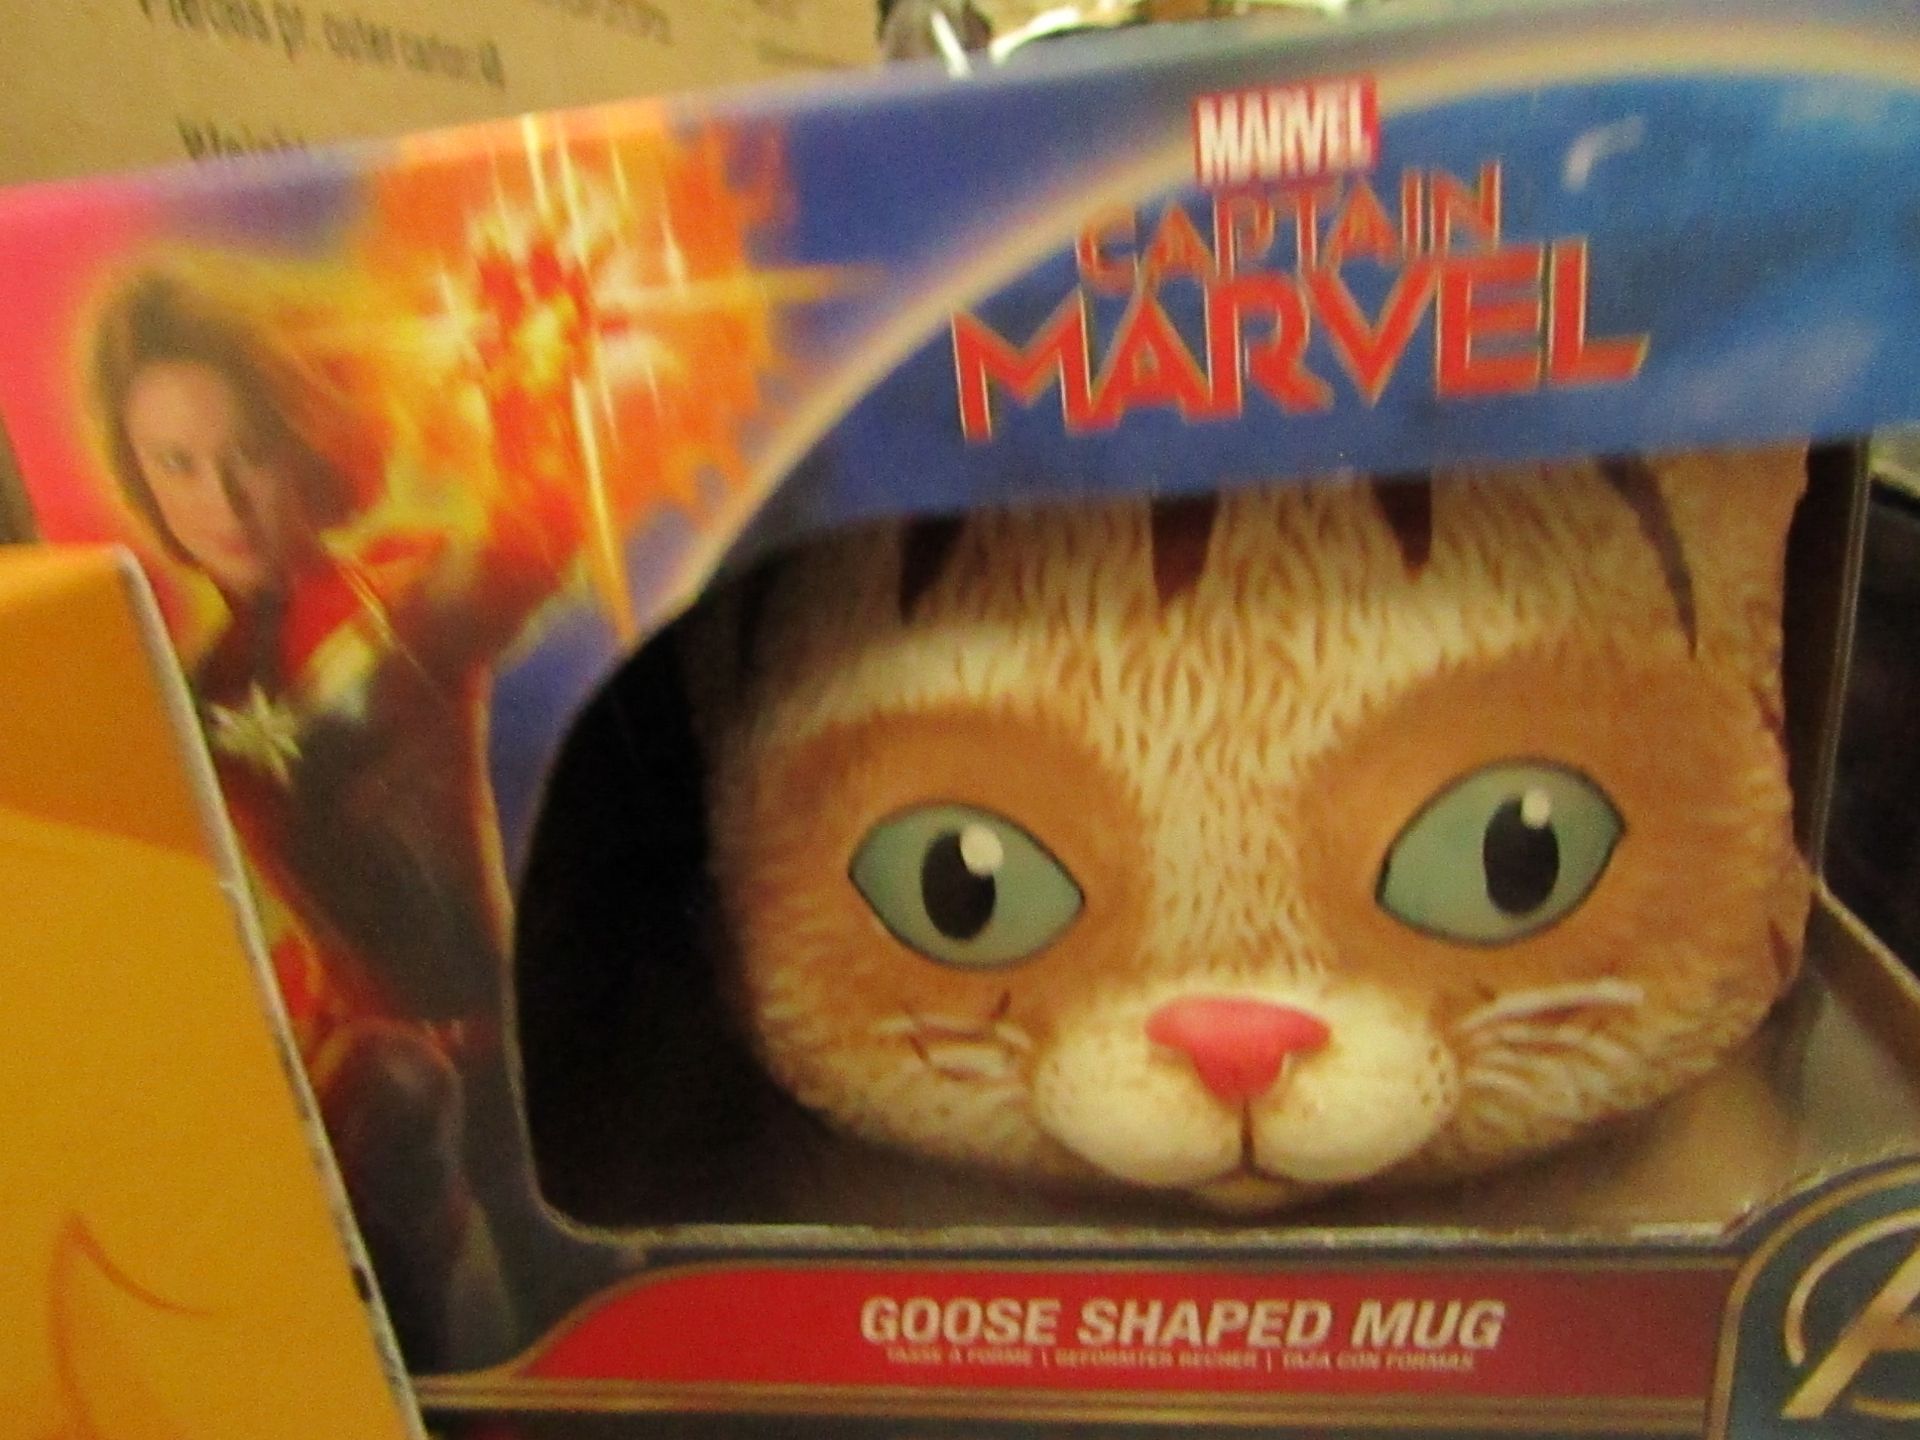 Marvel Captain Marvel goose shaped mug, new and boxed.